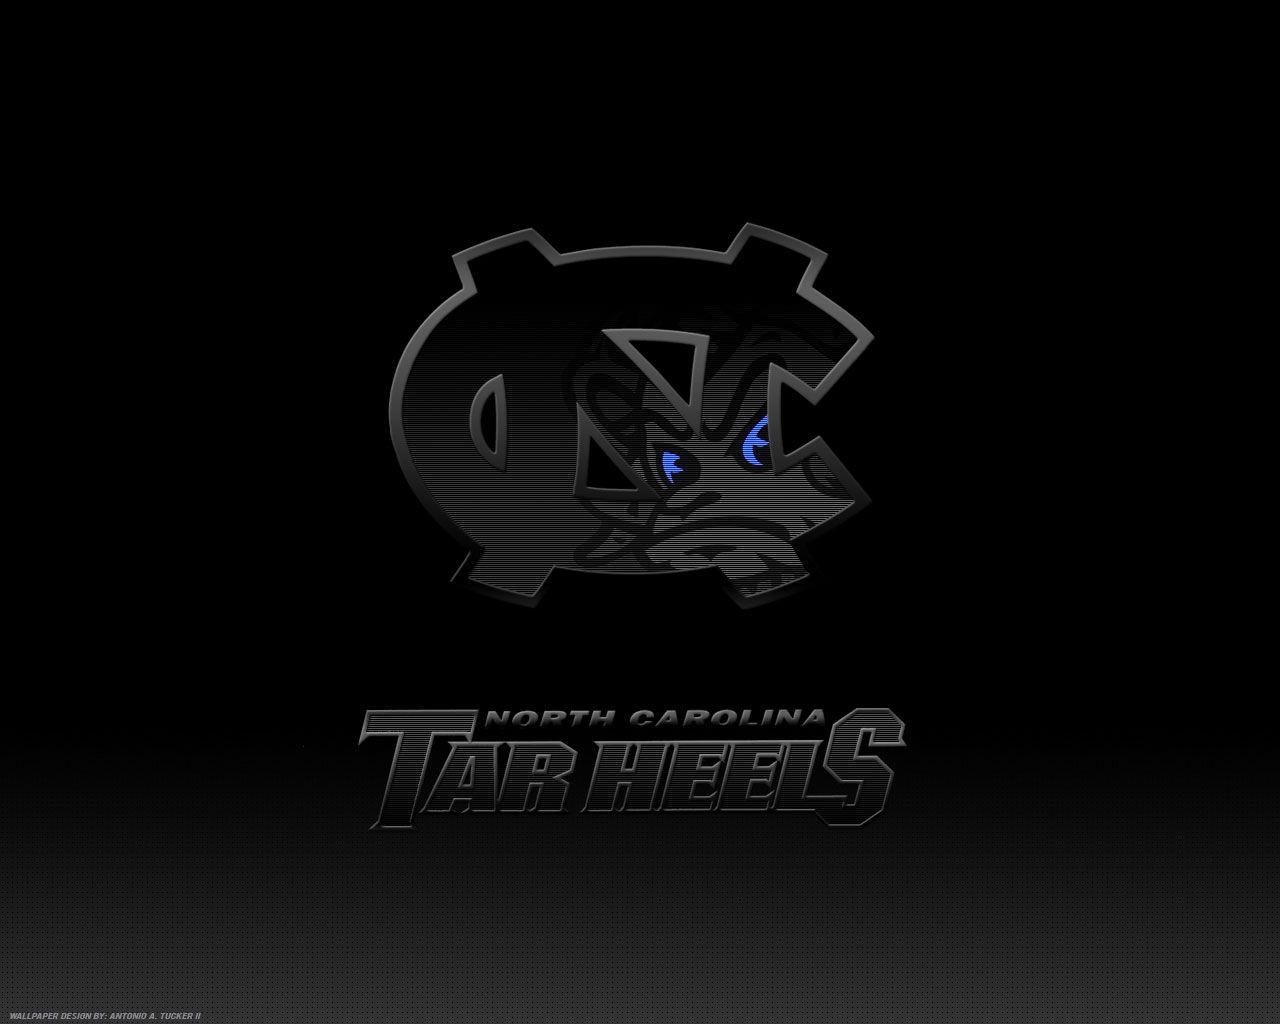 Tar Heels Logo - UNC Tar Heels Logo background wallpaper for desktop or web site. Get ...